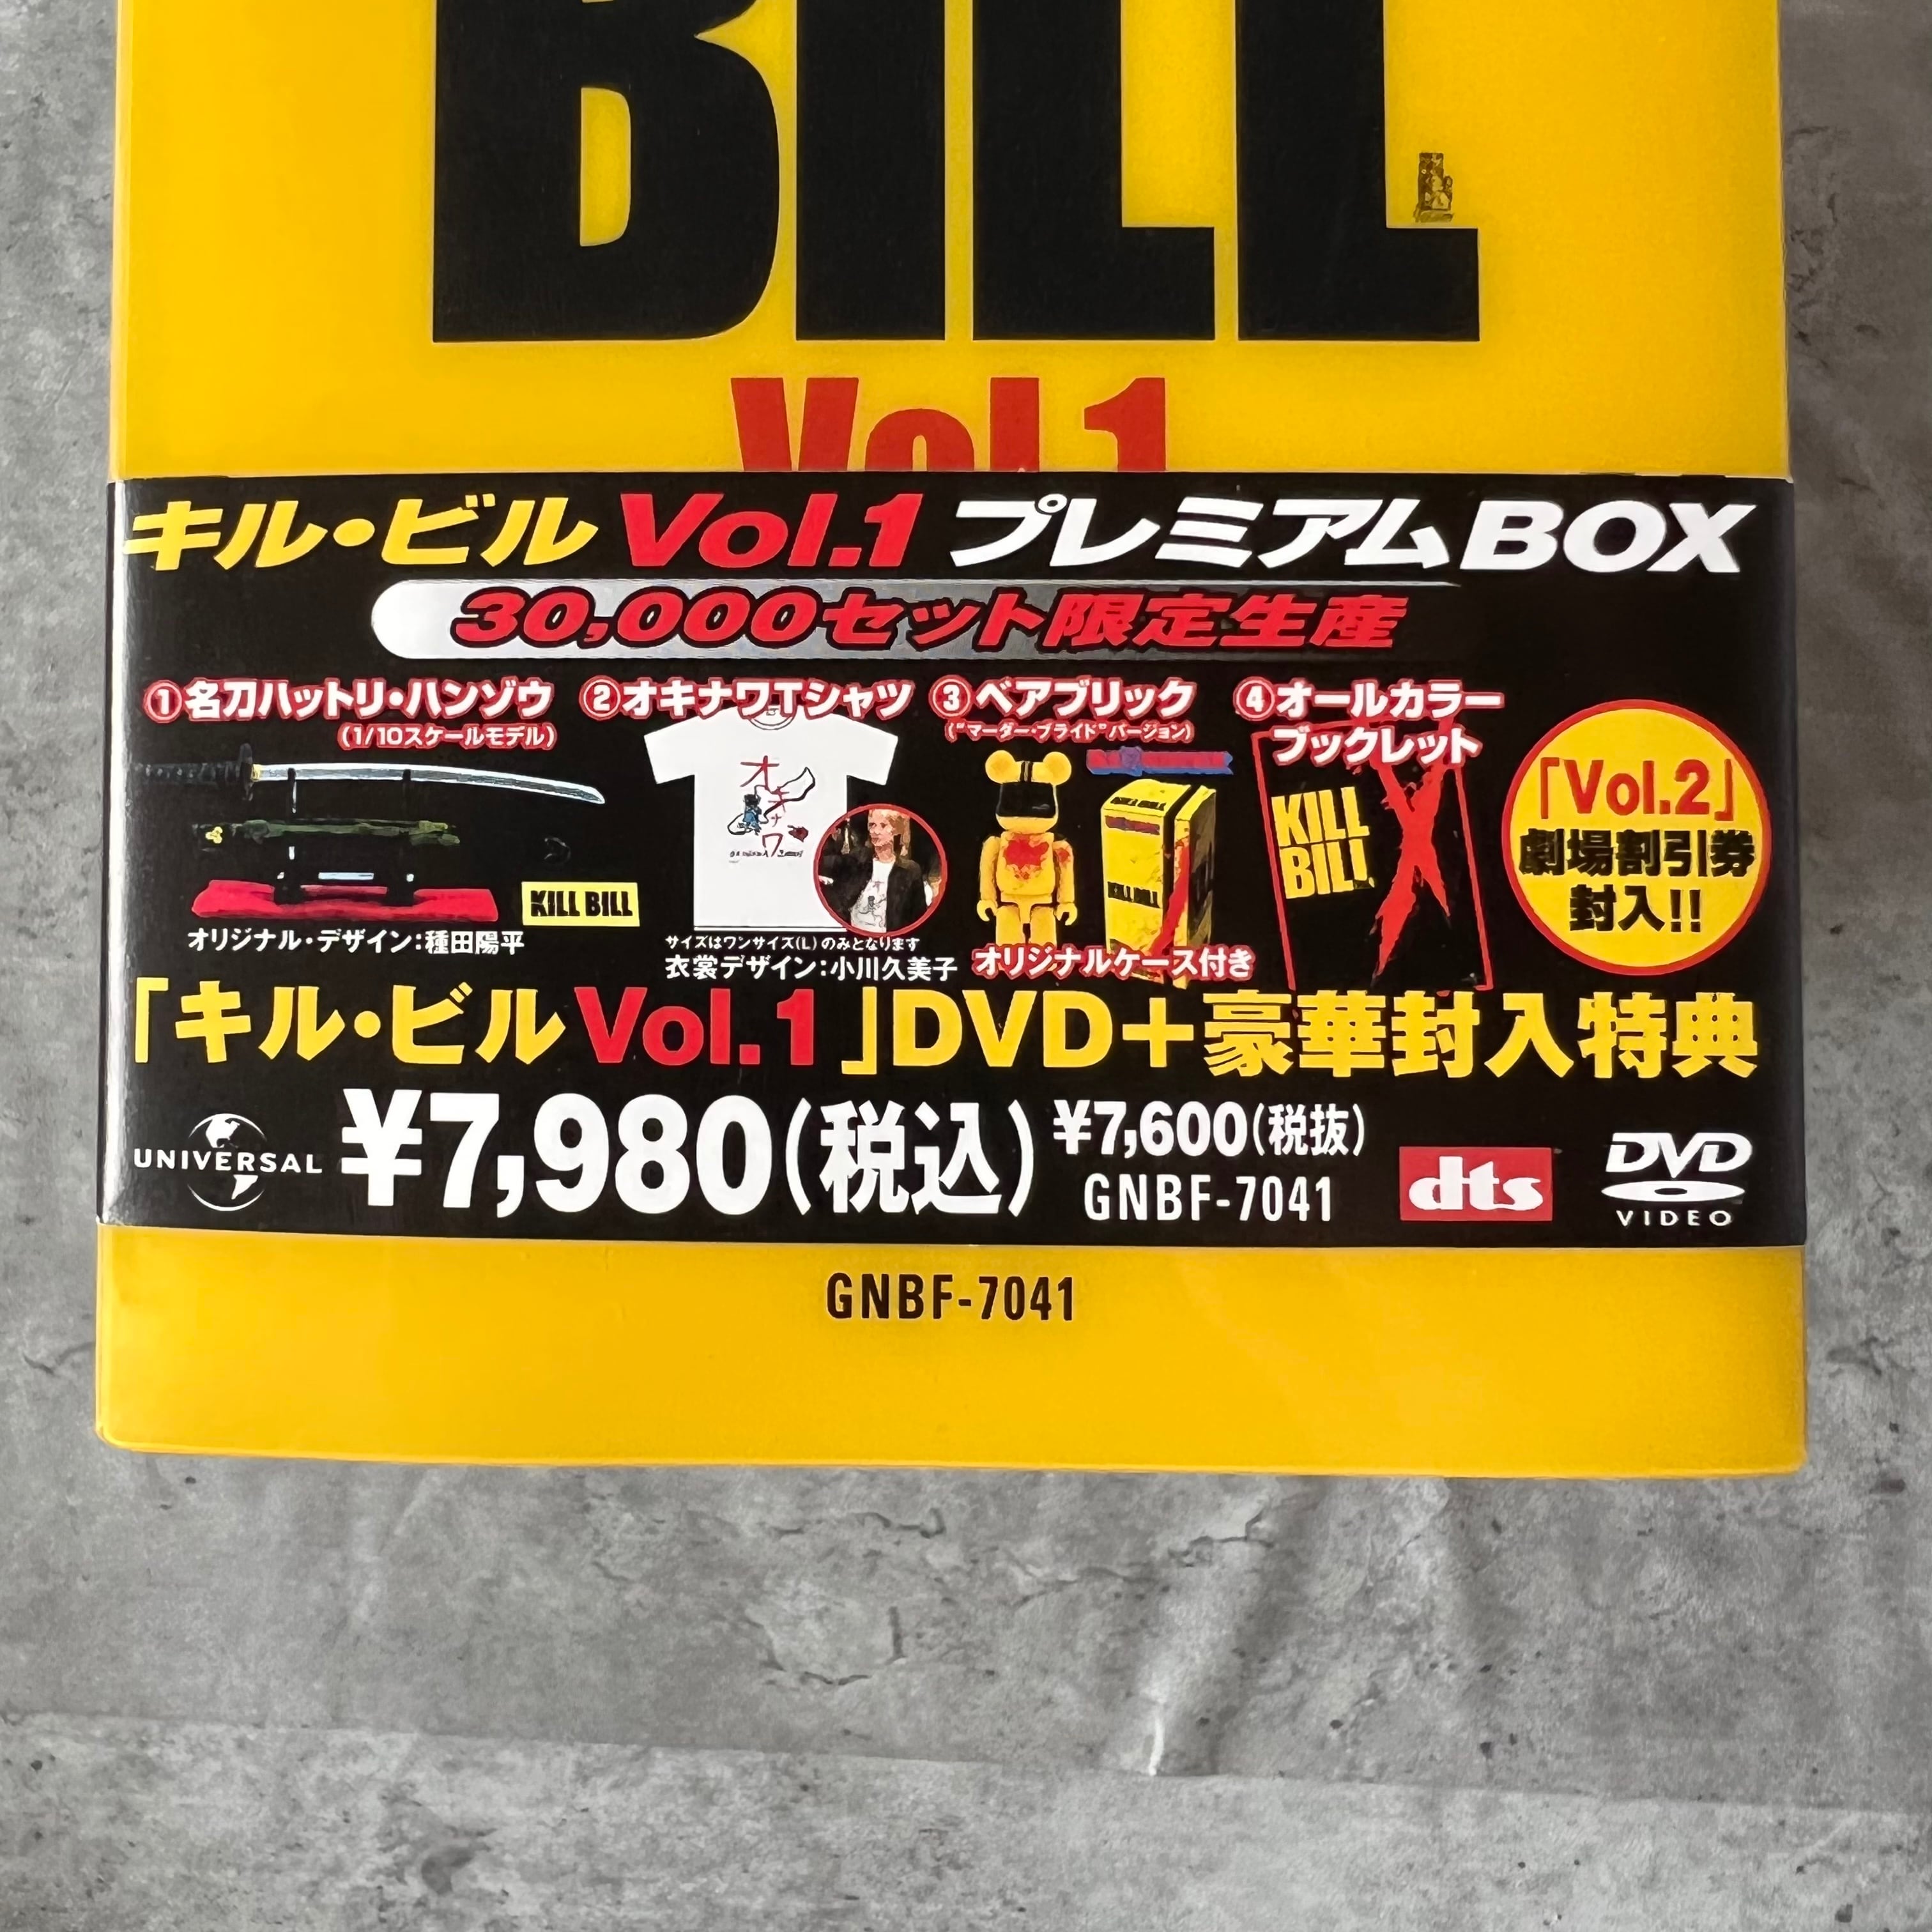 04s “KILL BILL vol.1” プレミアムボックス tシャツ ベアブリック入り 